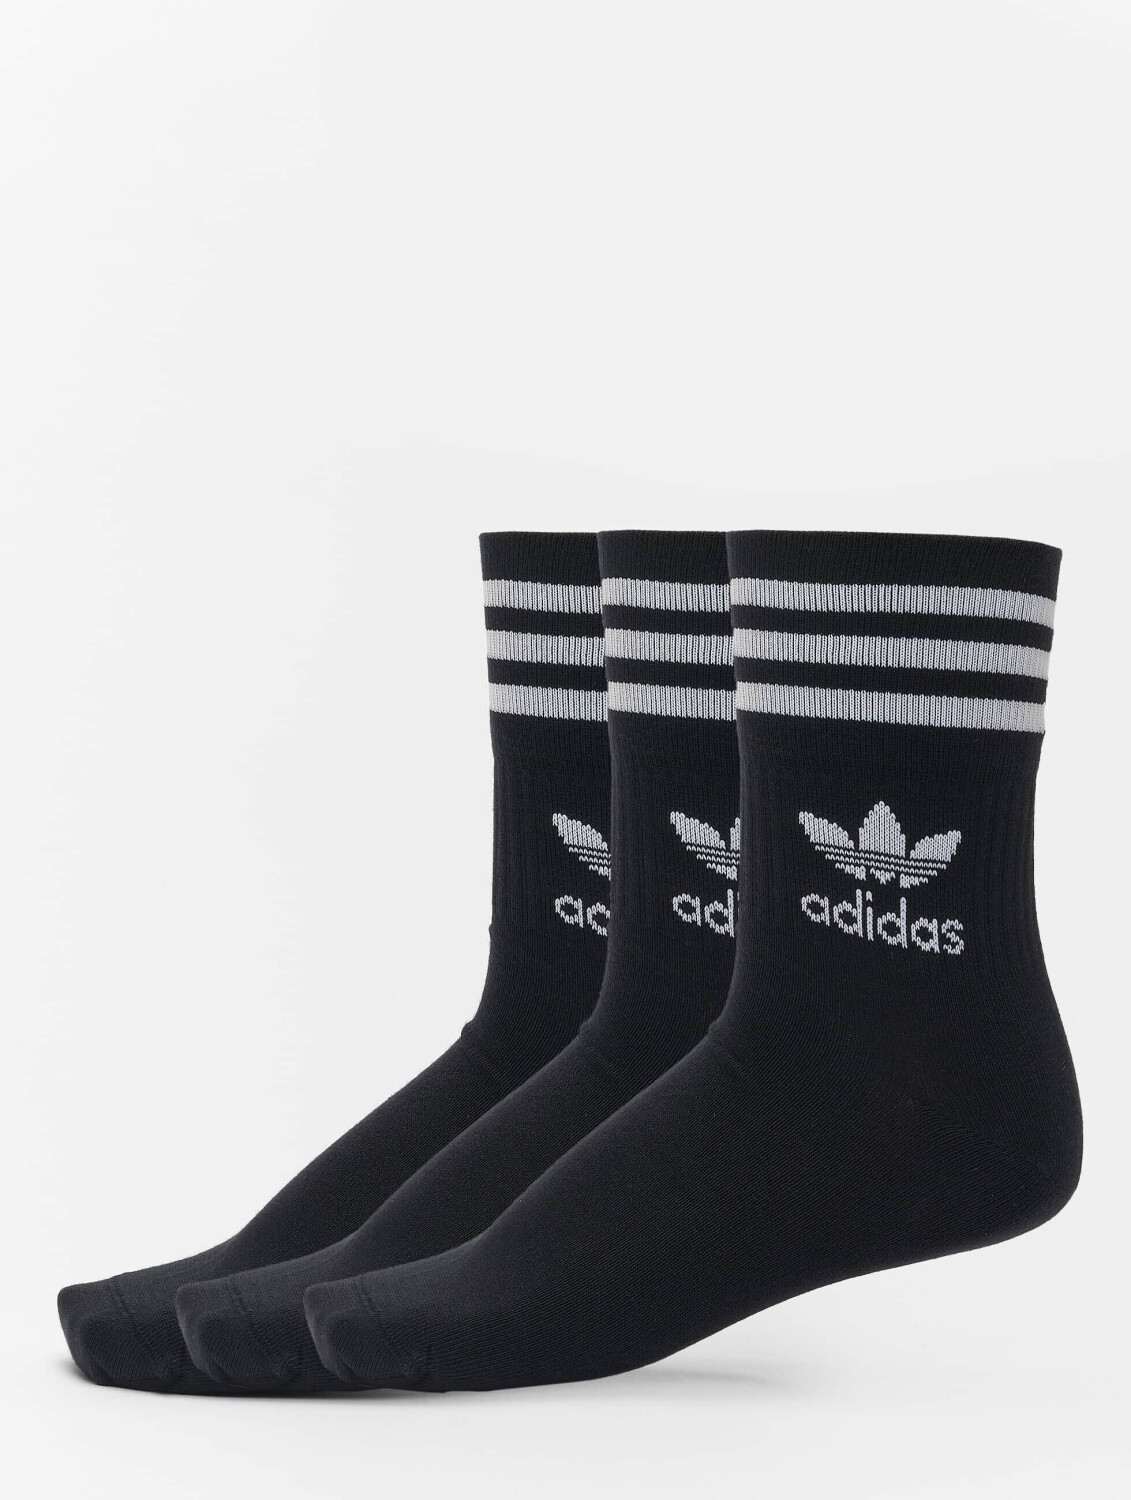 Buy Adidas Originals Mid Cut Crew Socks 3 Pairs (GD3576) black from £9. ...